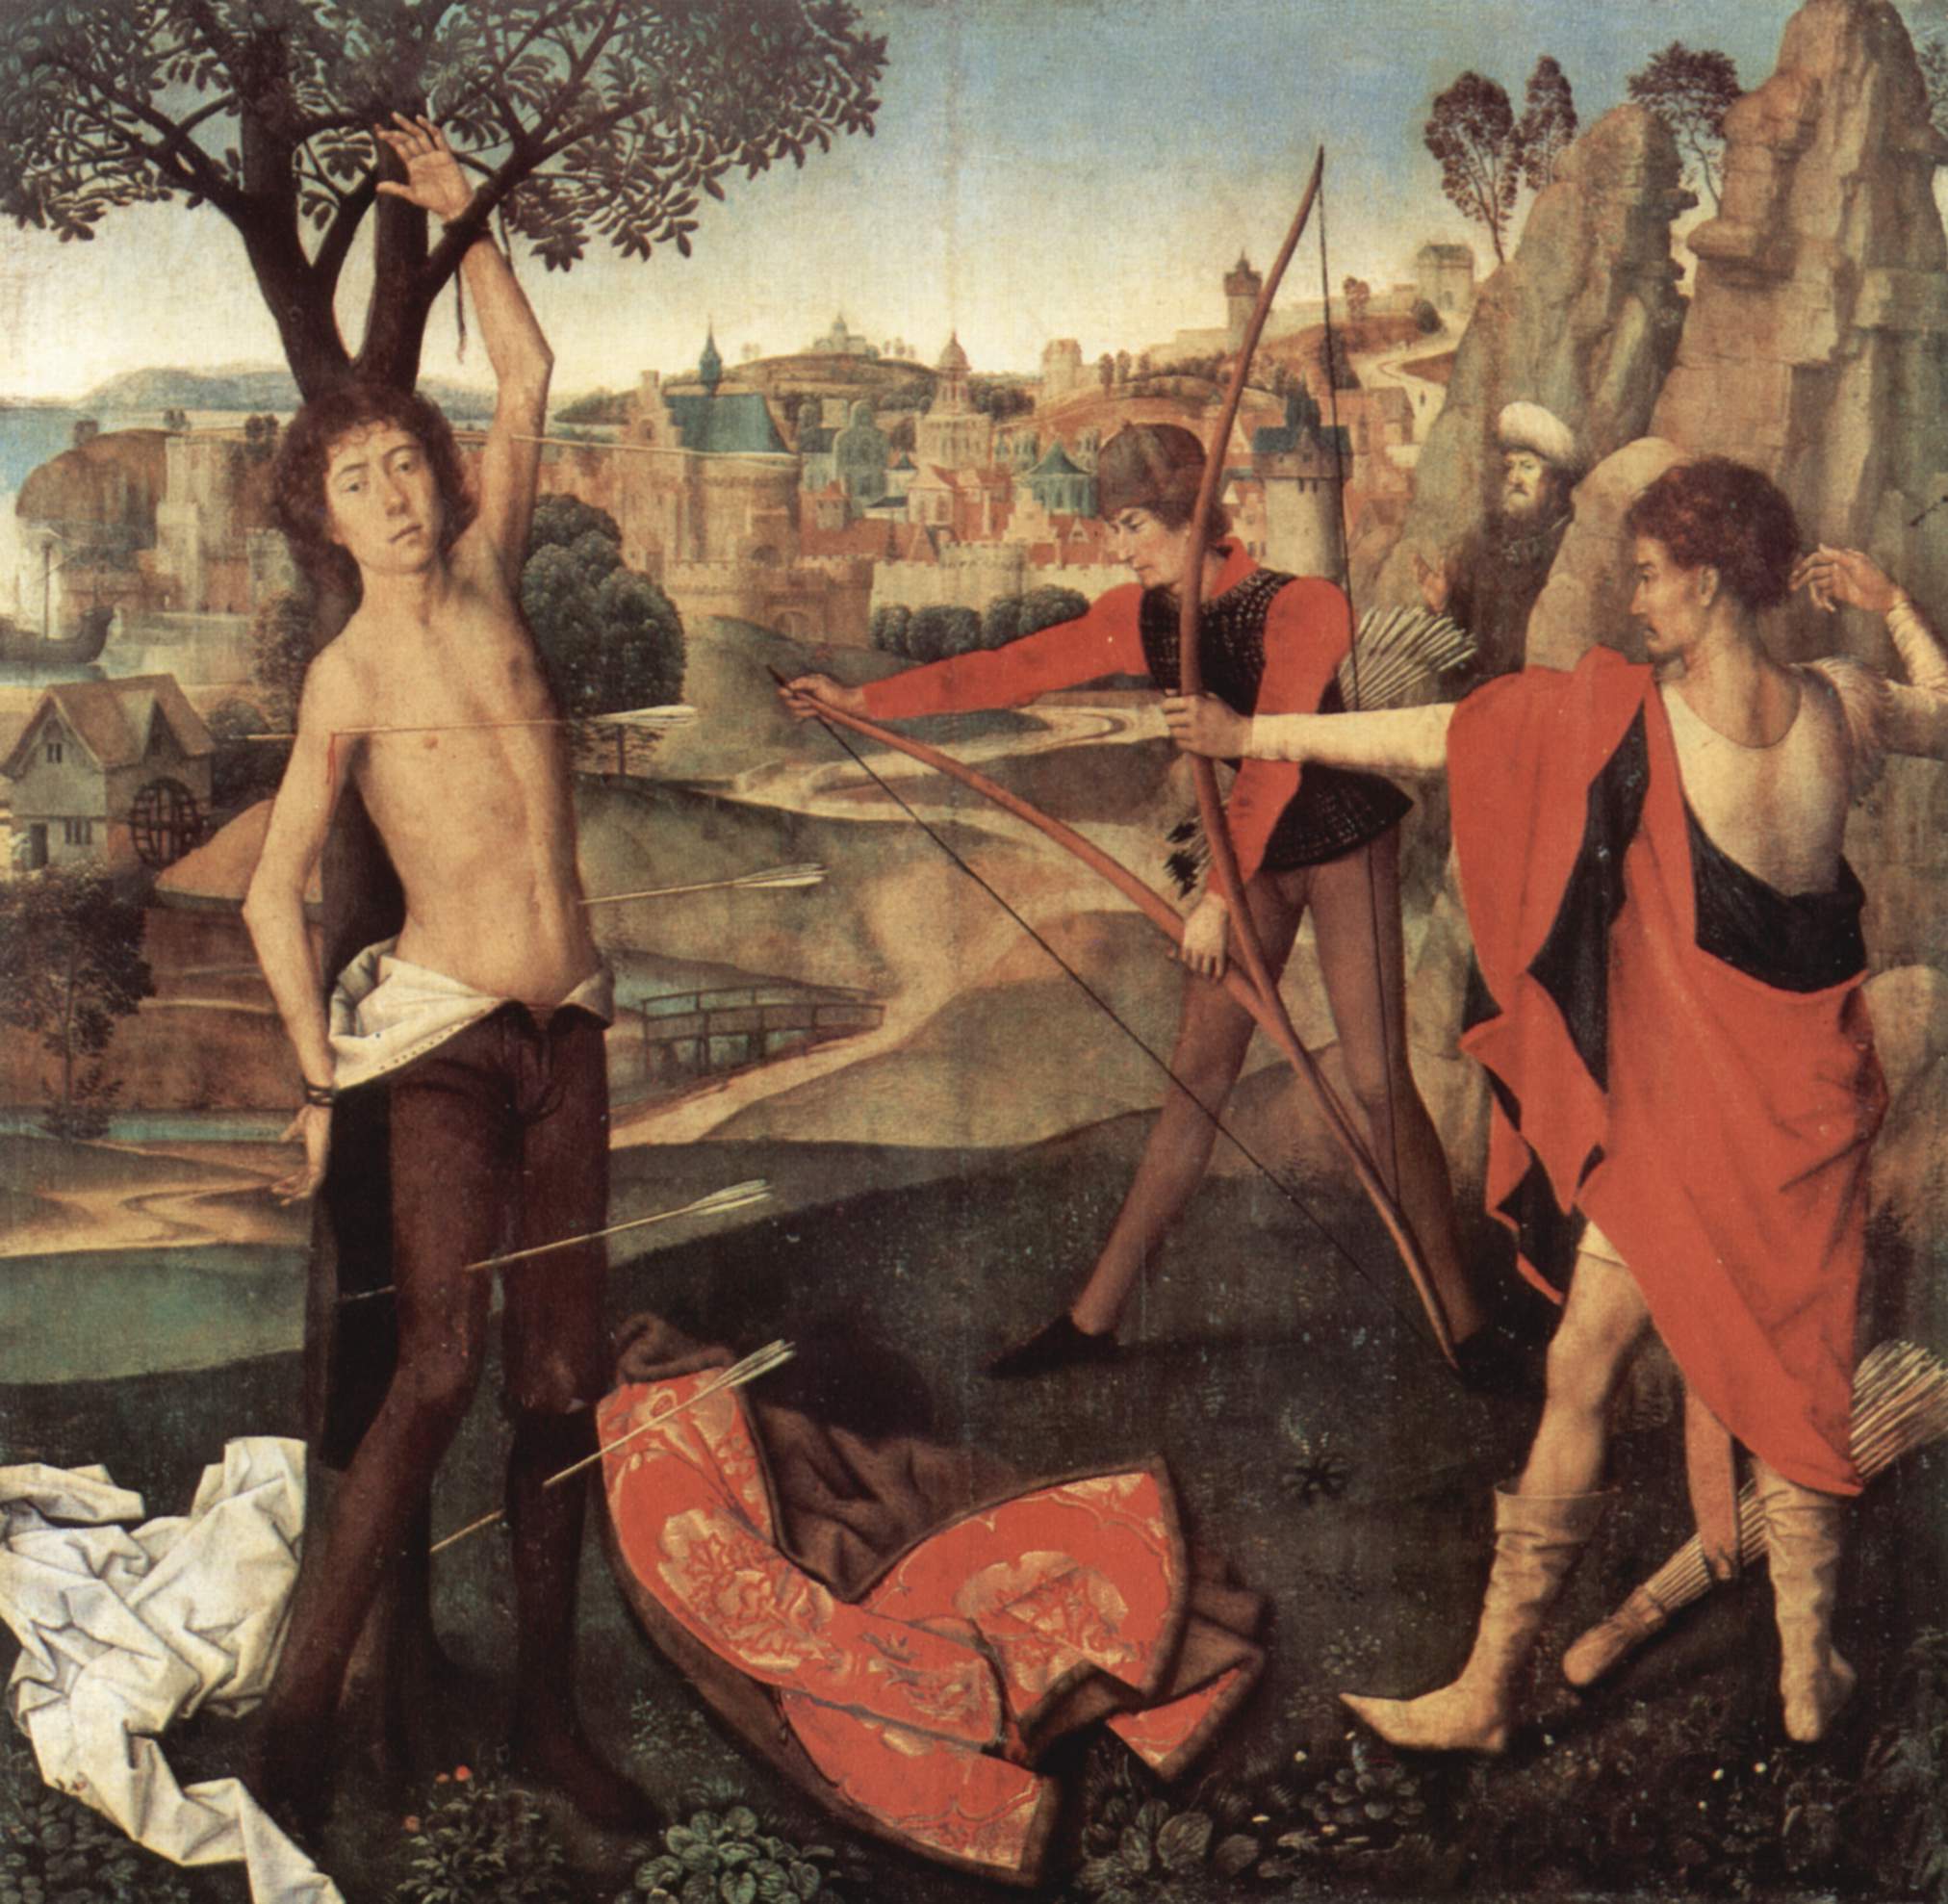 Hans Memling (about 1433-1494). "Saint Sebastian" (1470th, Brussels).